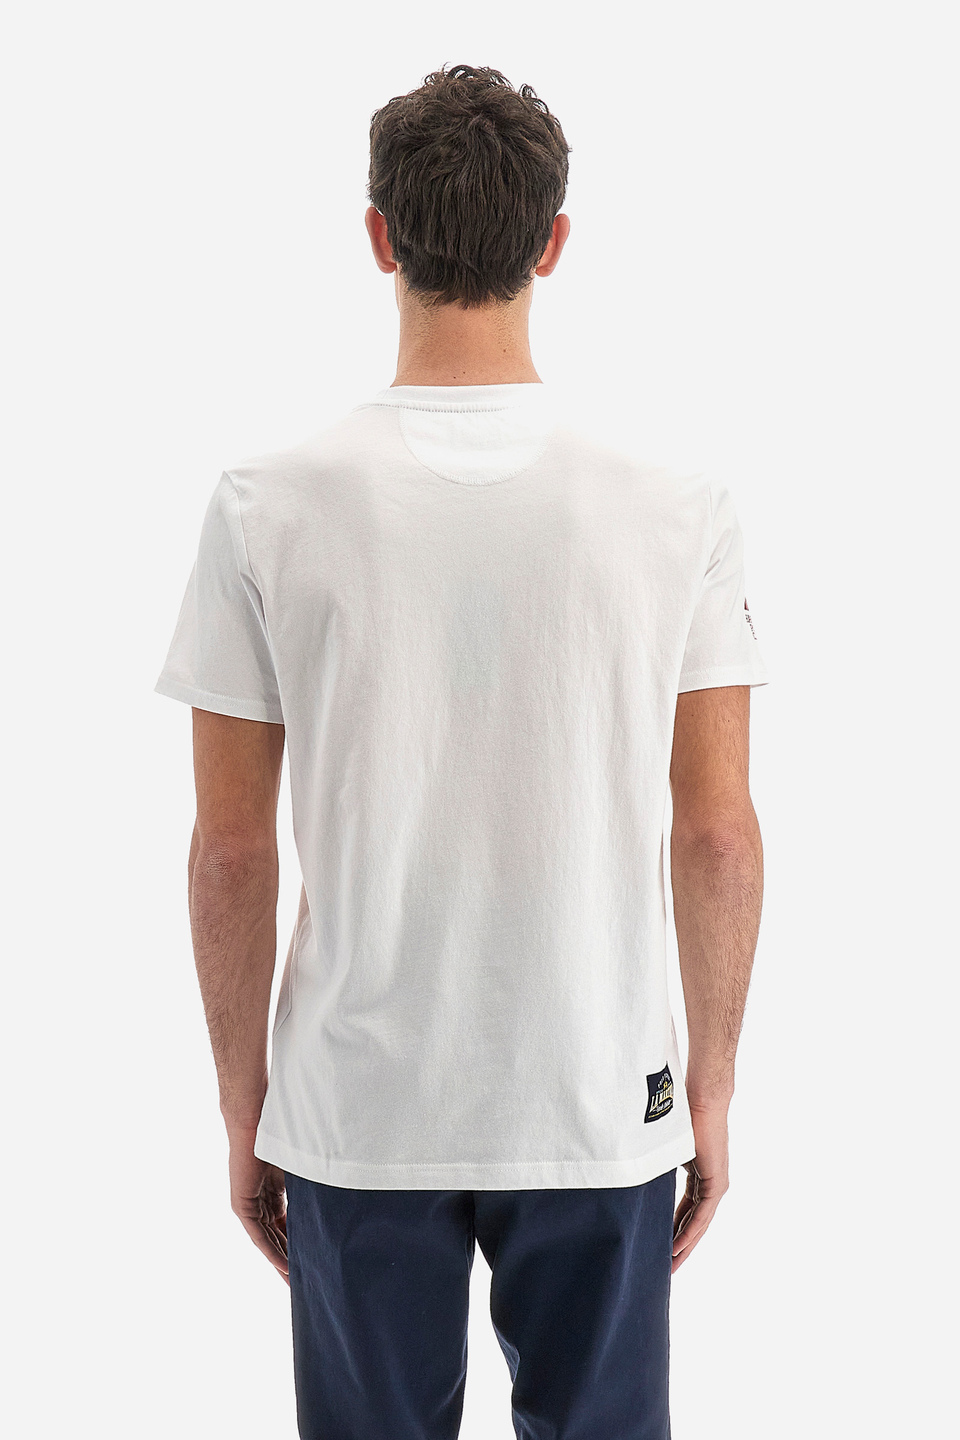 Tee-shirt homme coupe classique - Wylan | La Martina - Official Online Shop